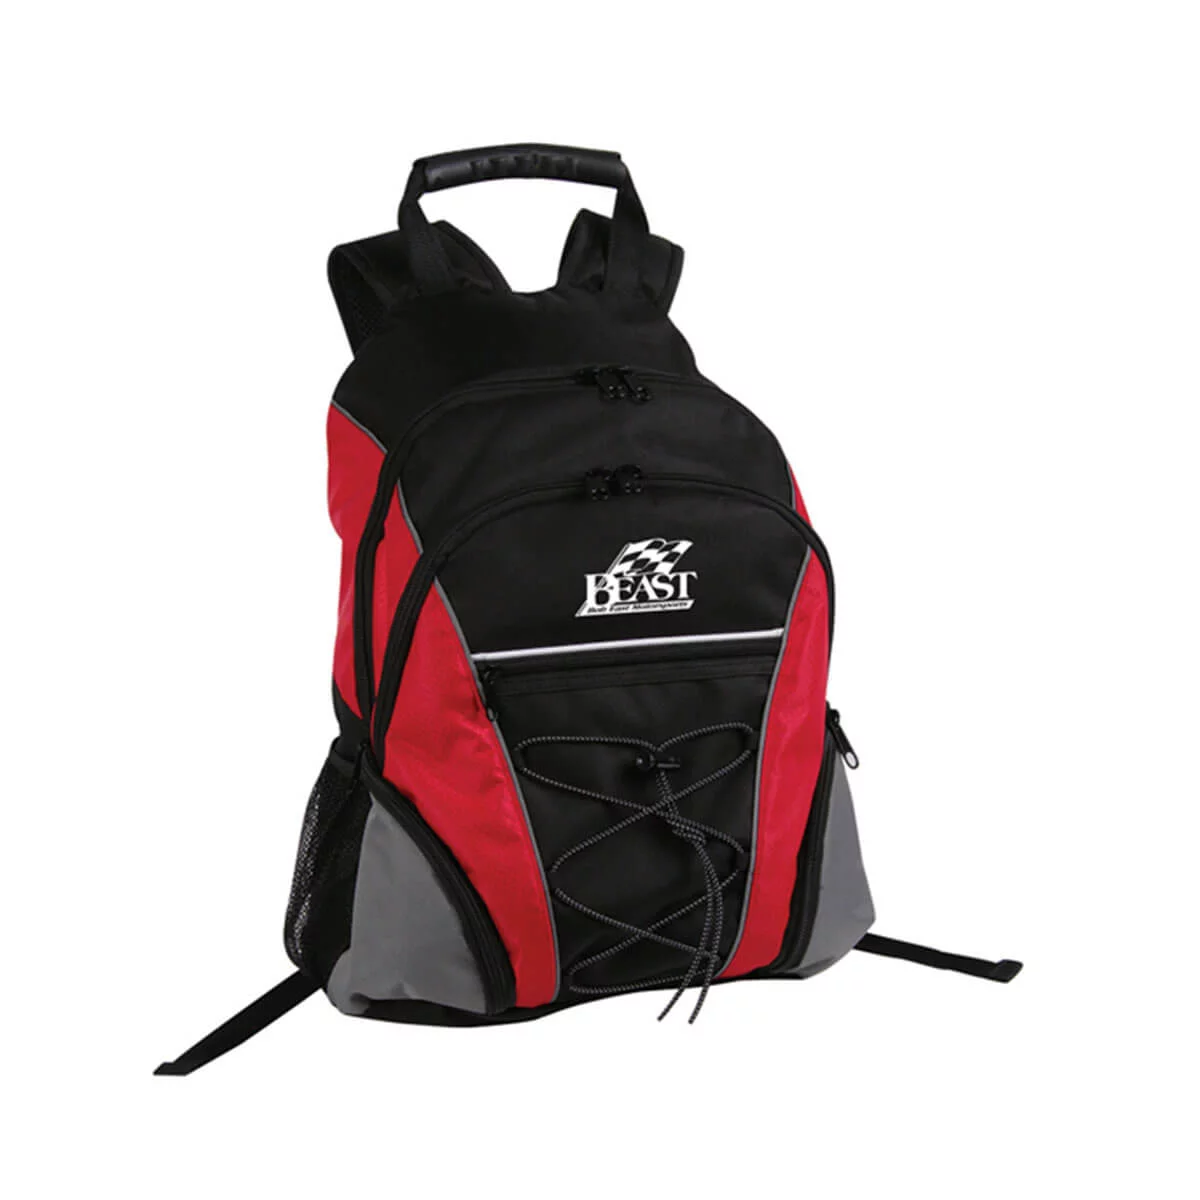 Fraser Backpack | Brand Promotional Backpacks | Brand Bag